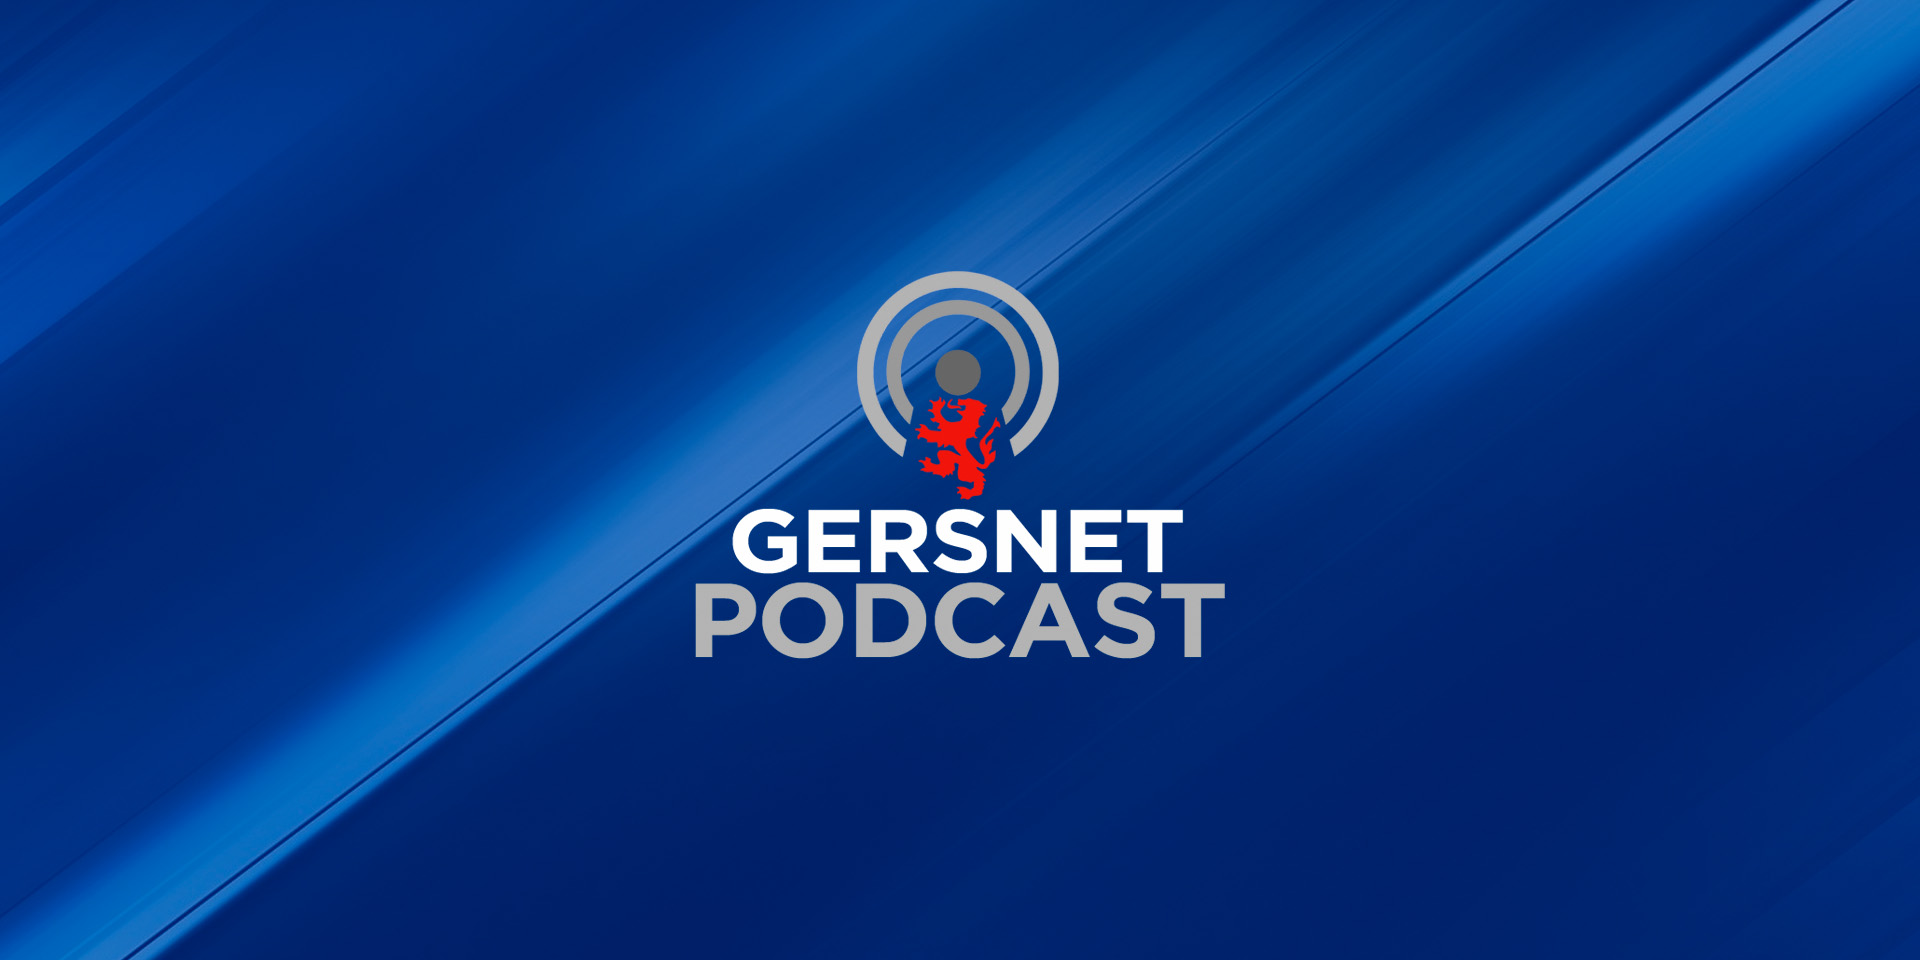 Gersnet Podcast 272 - Season Review 2022/23